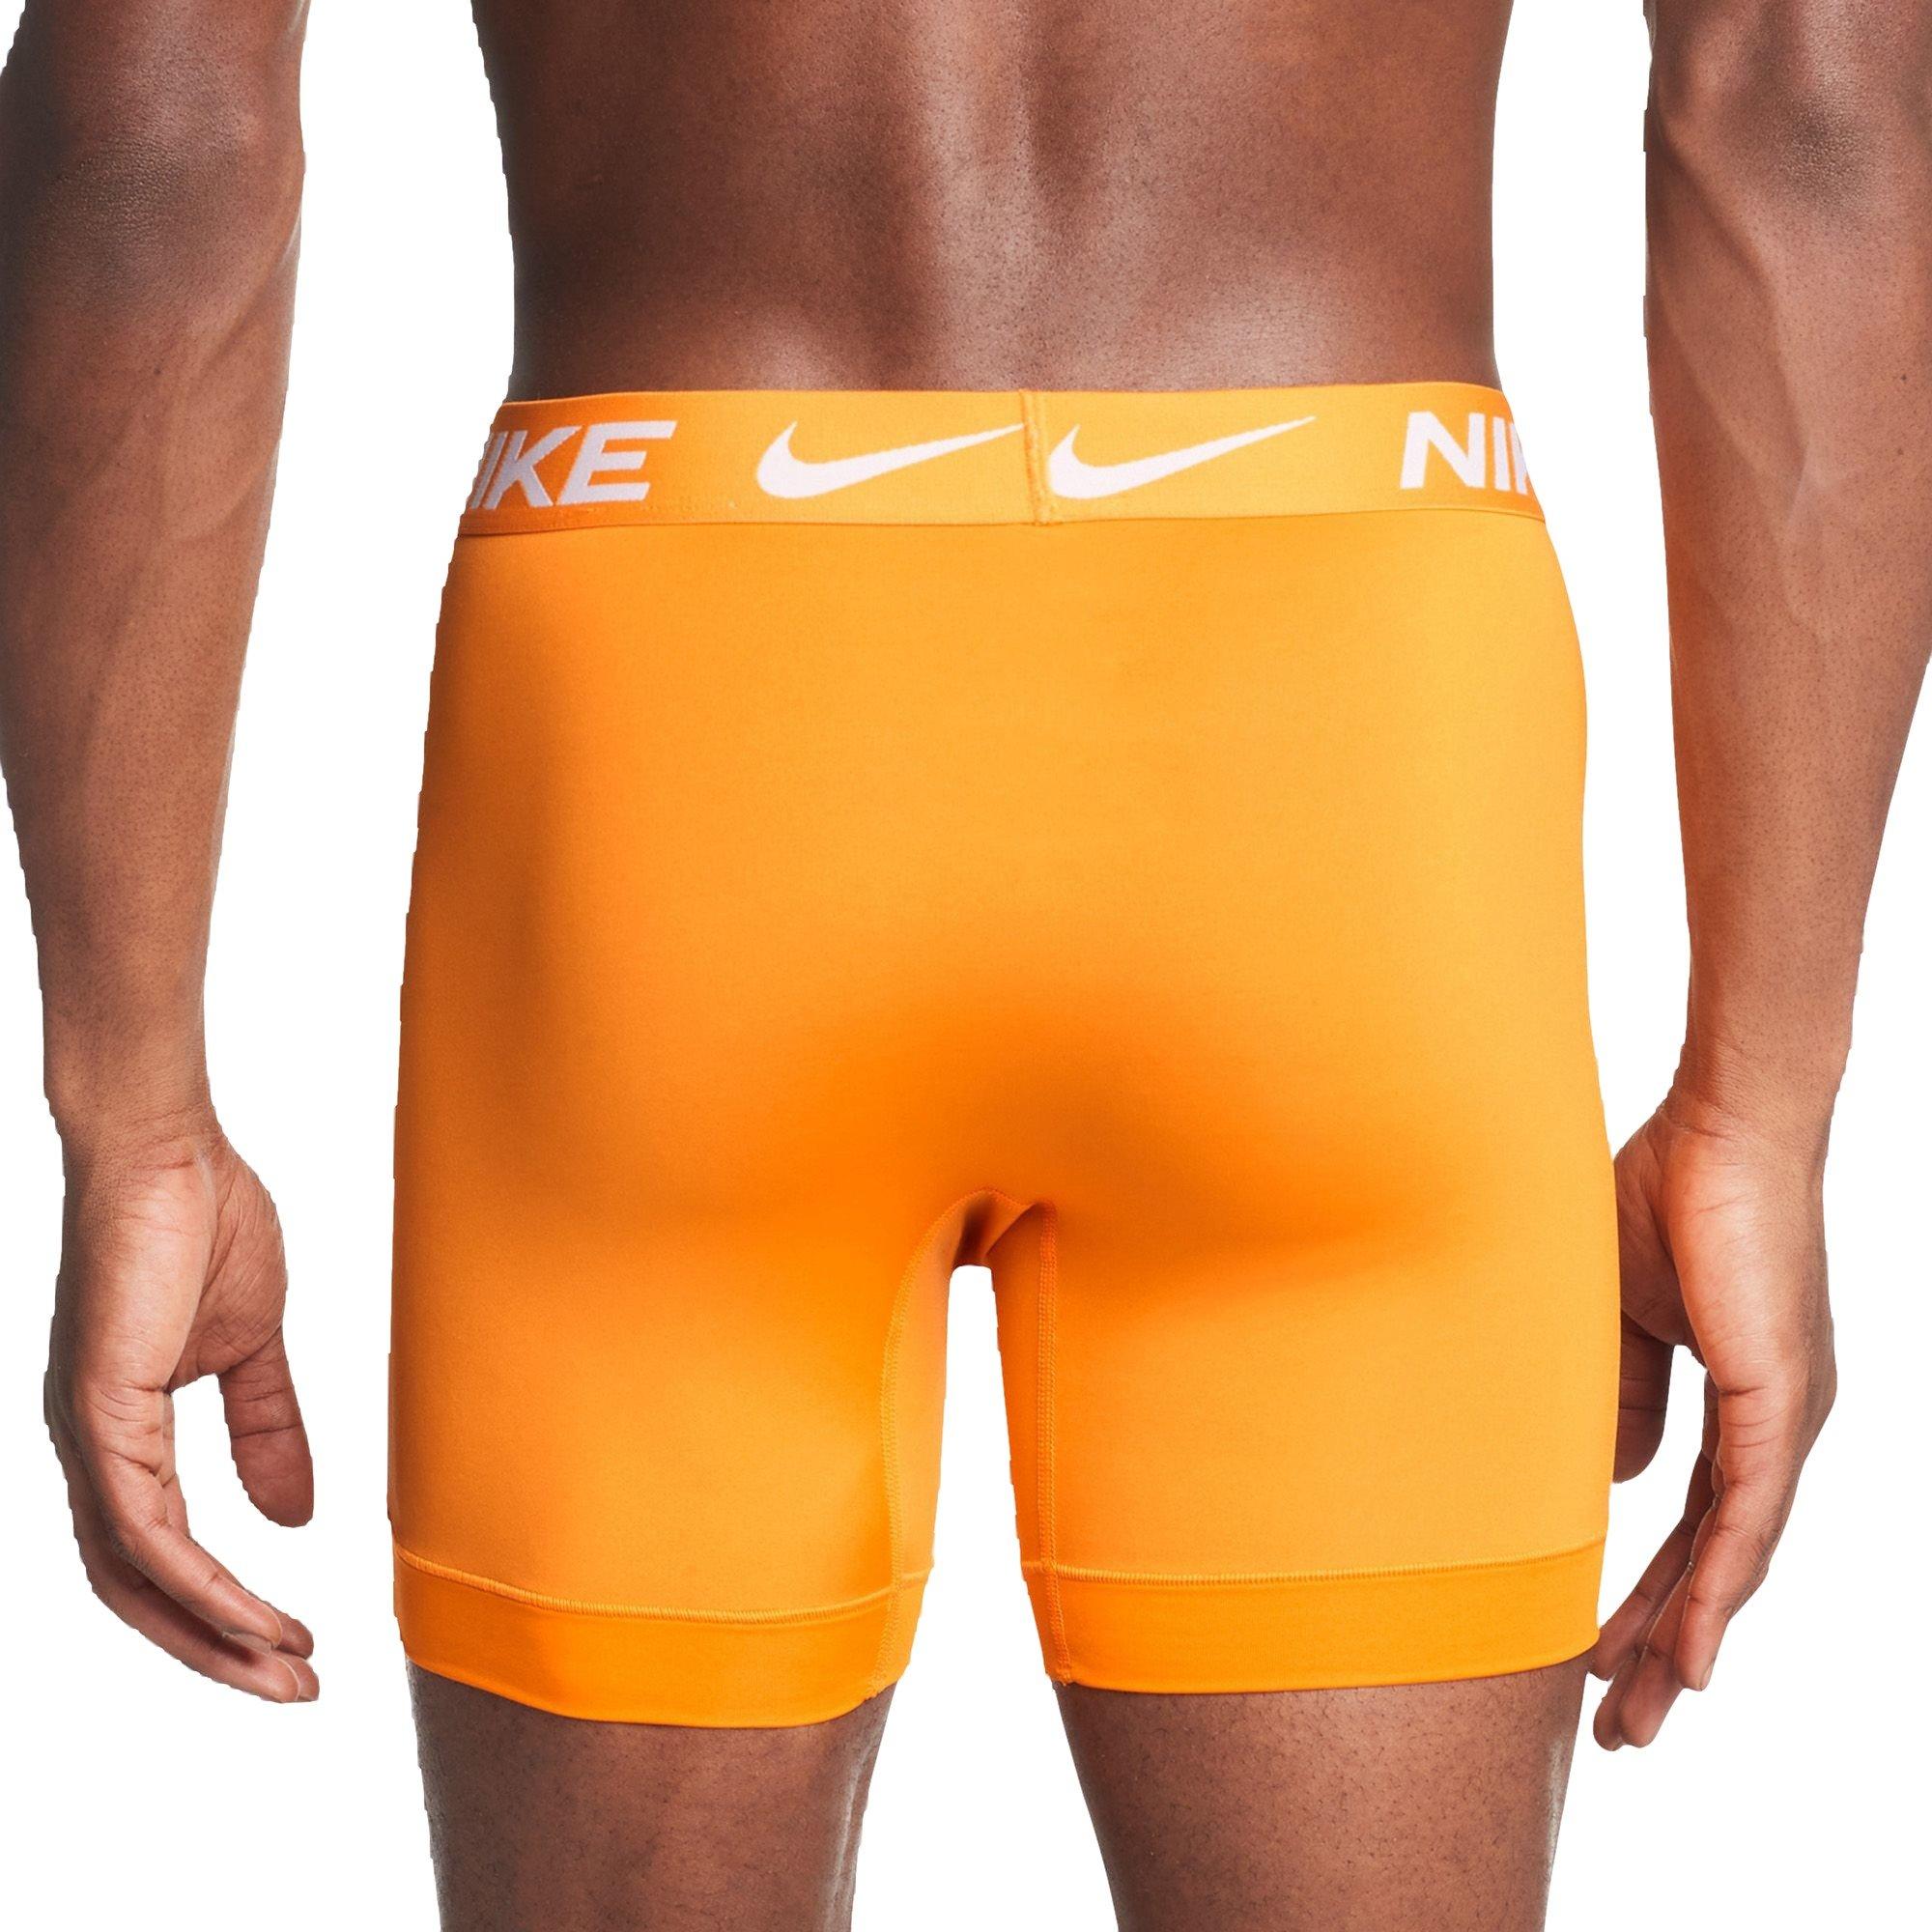 Nike Men's Boxer Brief 3-Pack - Orange/Purple